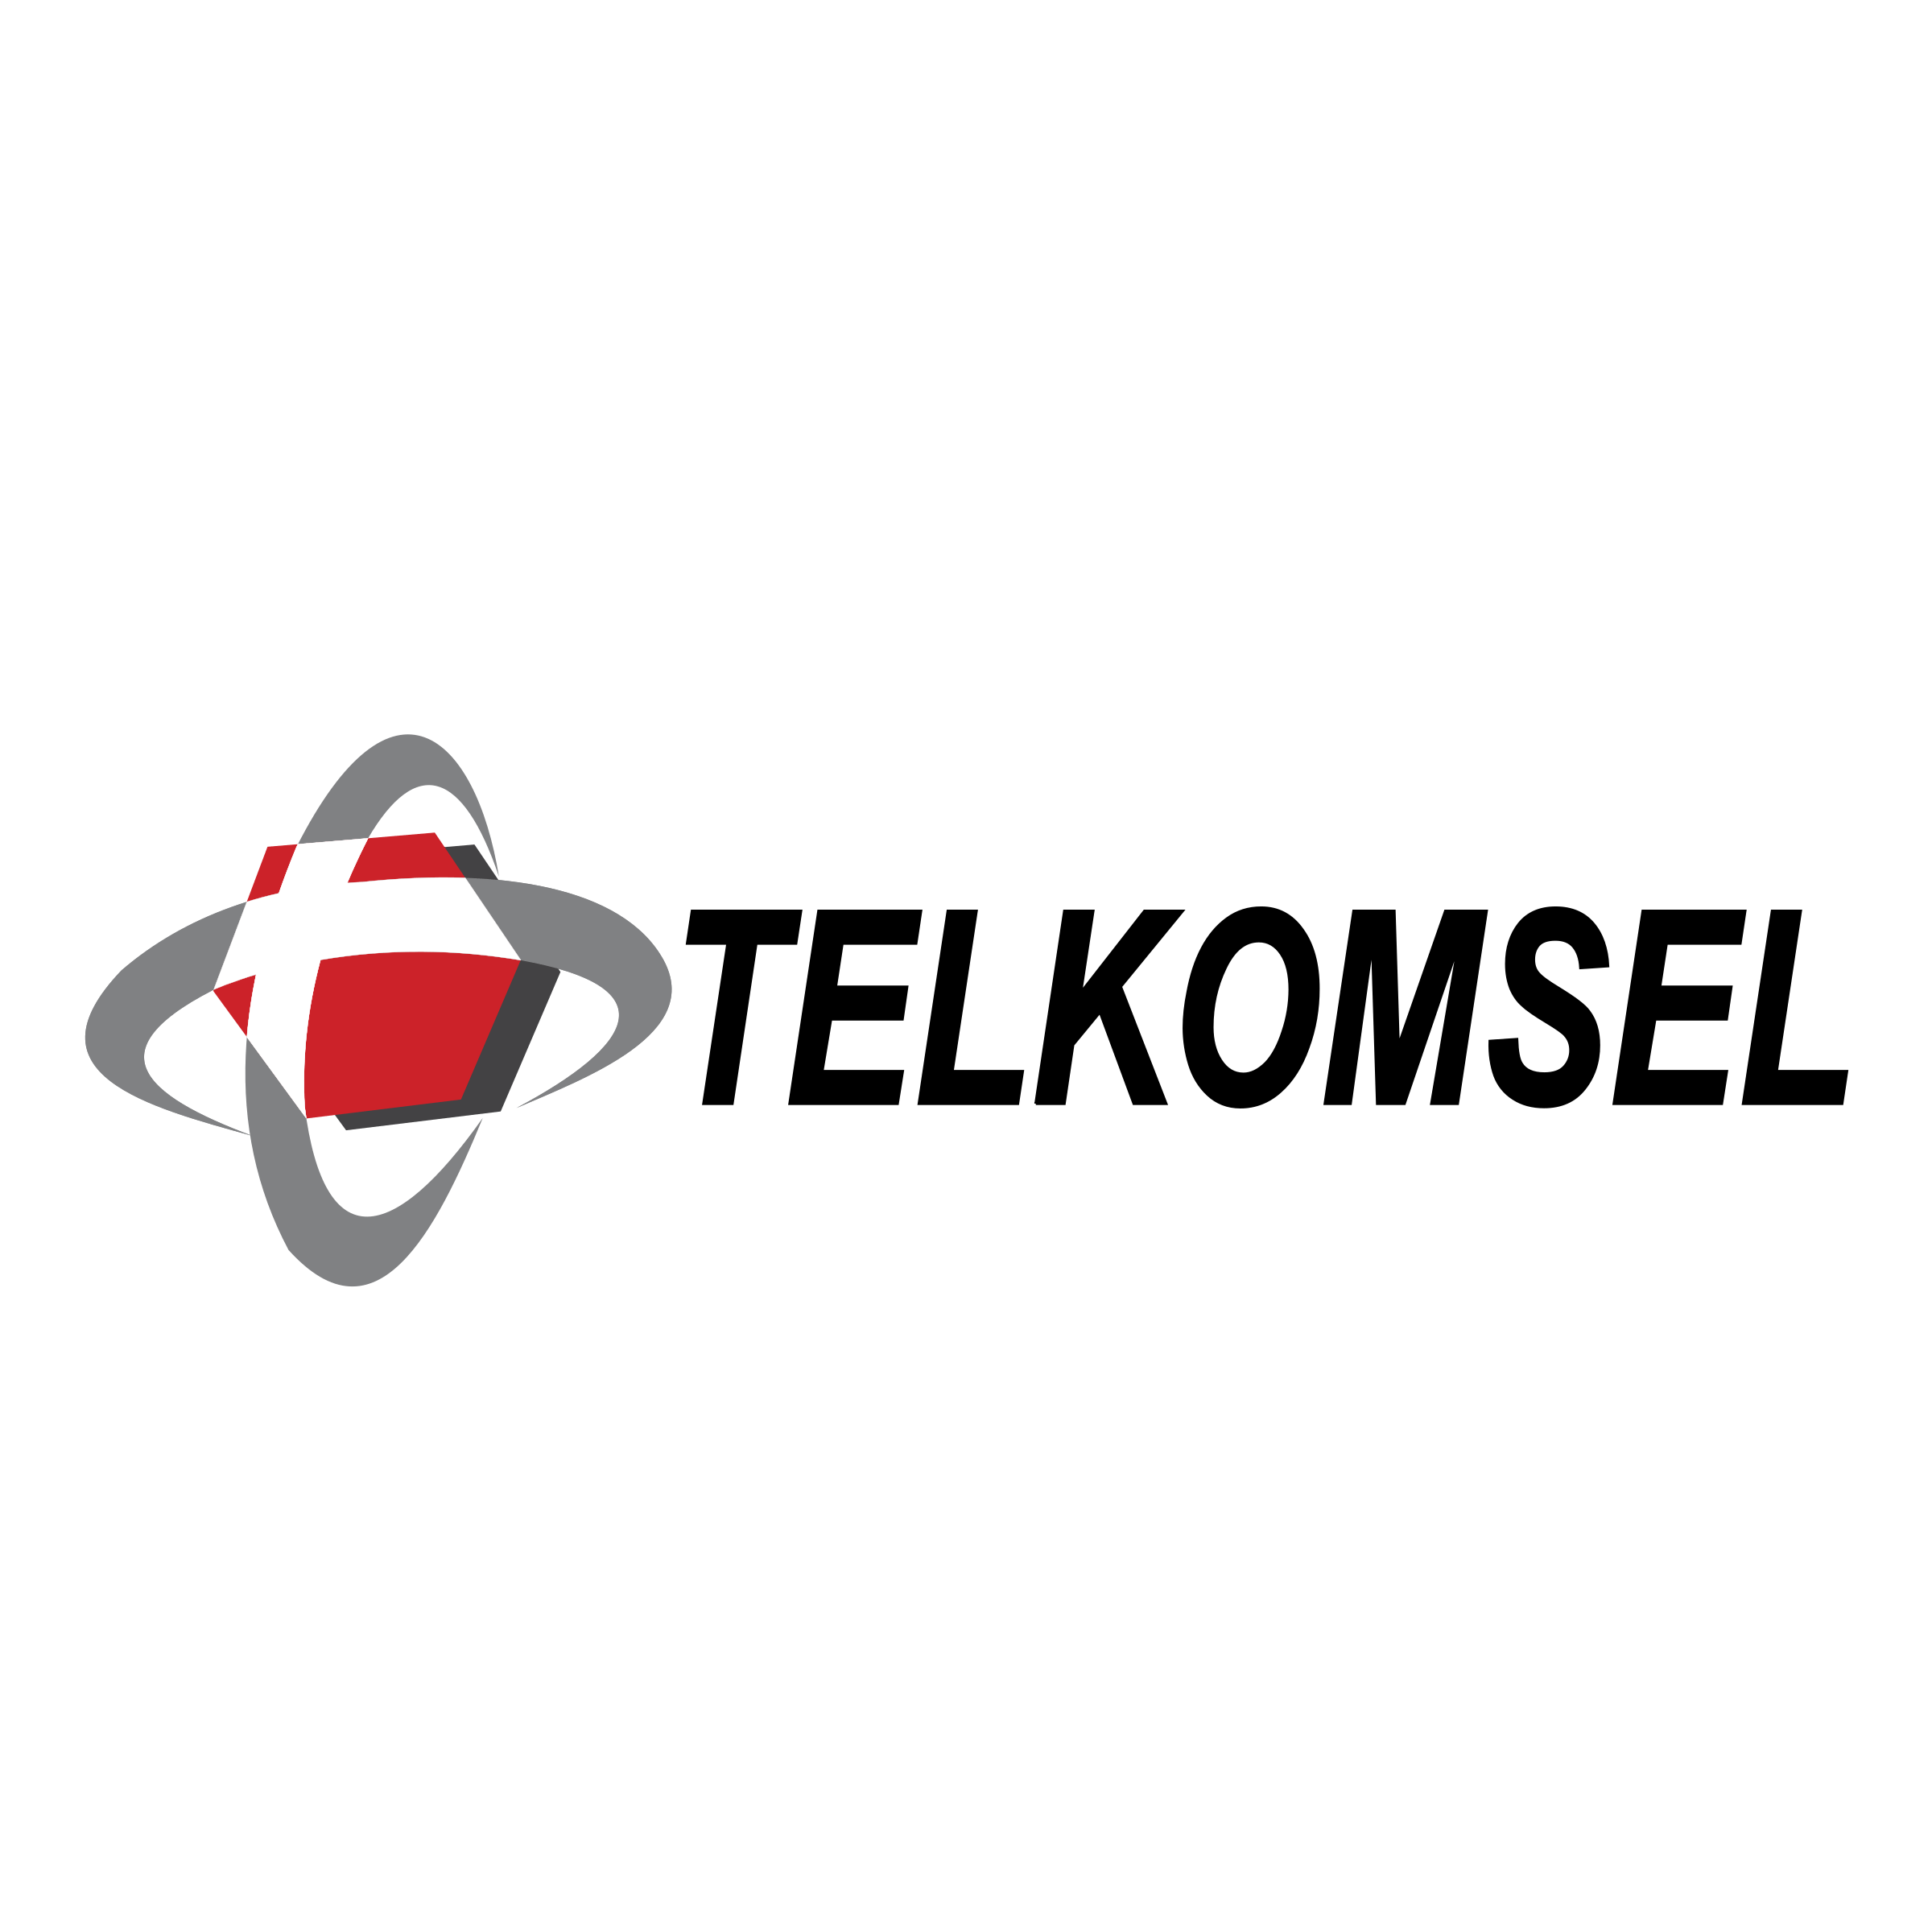 telkomsel-logo-png-transparent